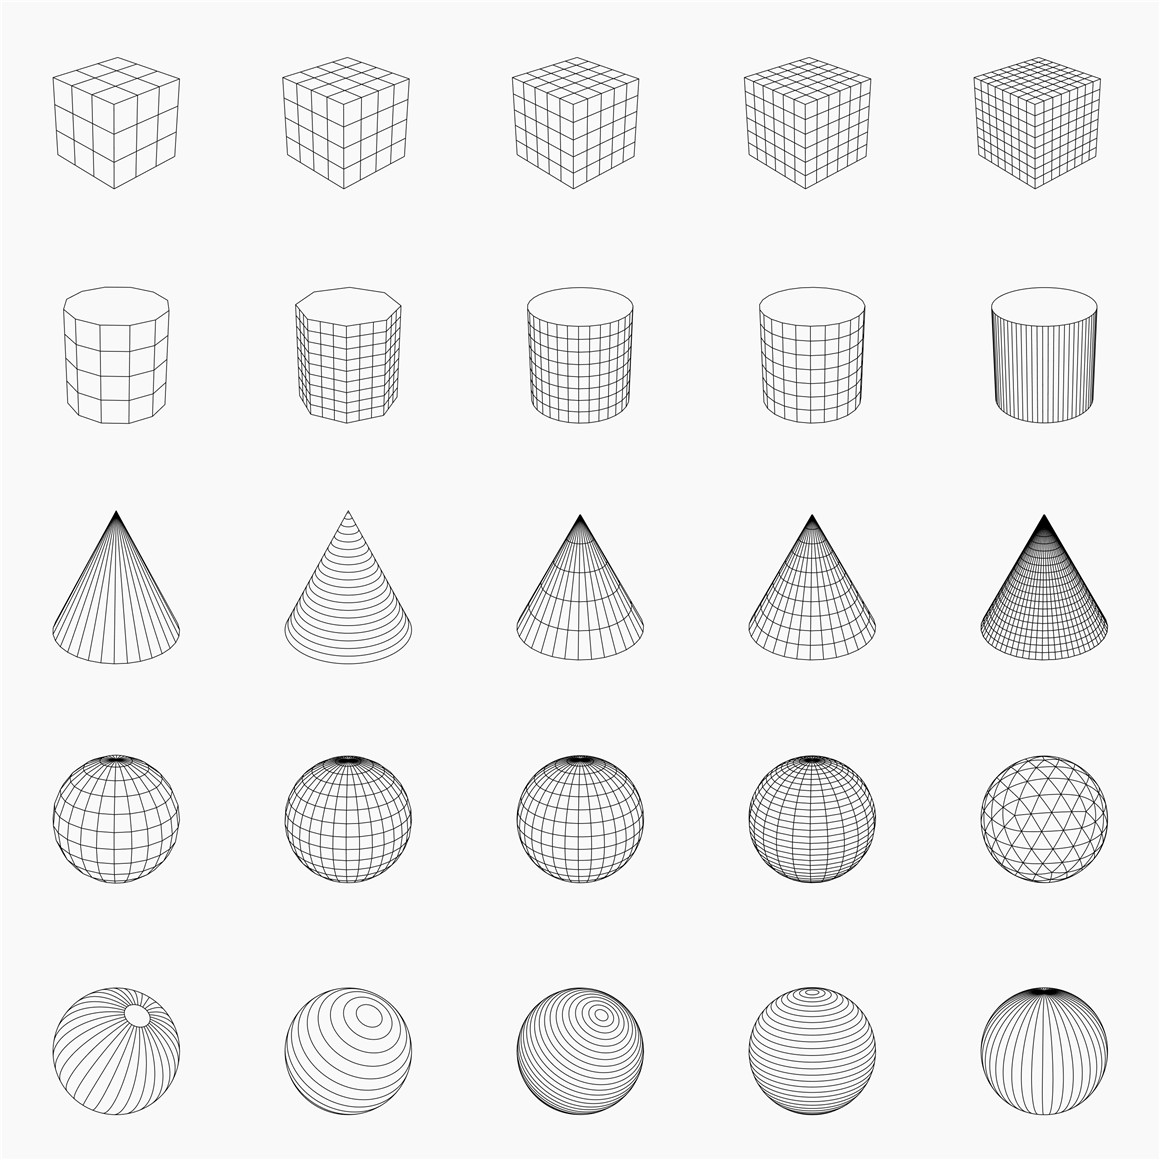 LS.GRAPHICS 350多款未来赛博朋克科幻酸性点线面3d立体几何构成抽象机能图形设计素材 350+ Abstract Contours Shapes 图片素材 第18张